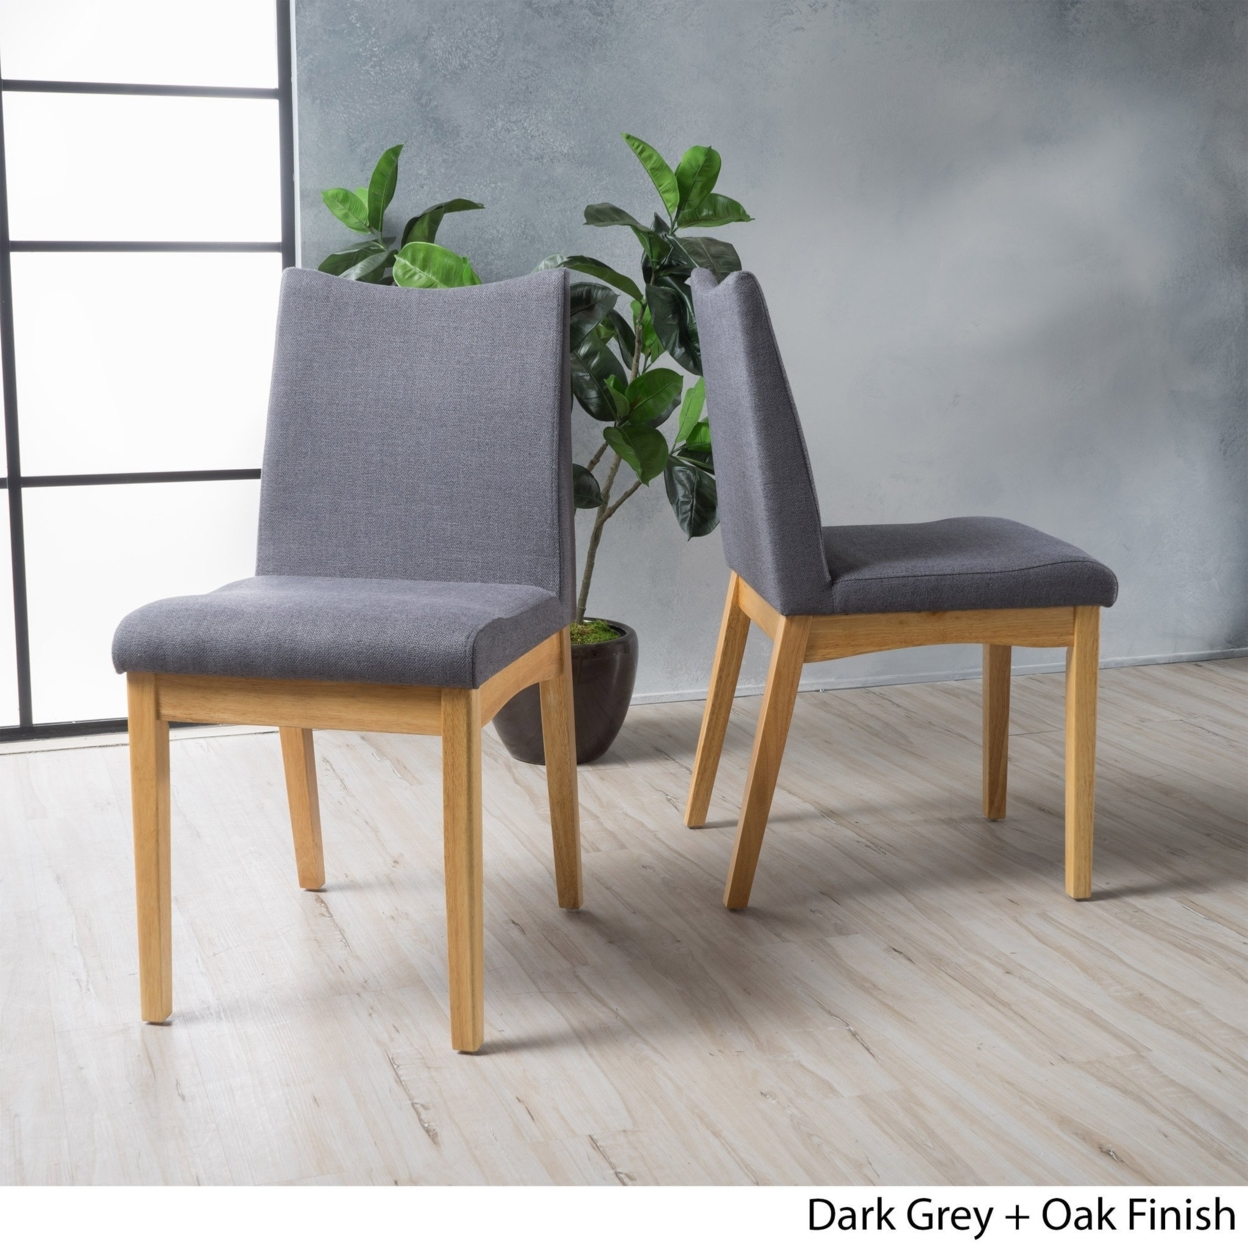 Gertrude Fabric & Wood Finish Mid-Century Modern Dining Chairs (Set Of 2) - Light Beige, Walnut